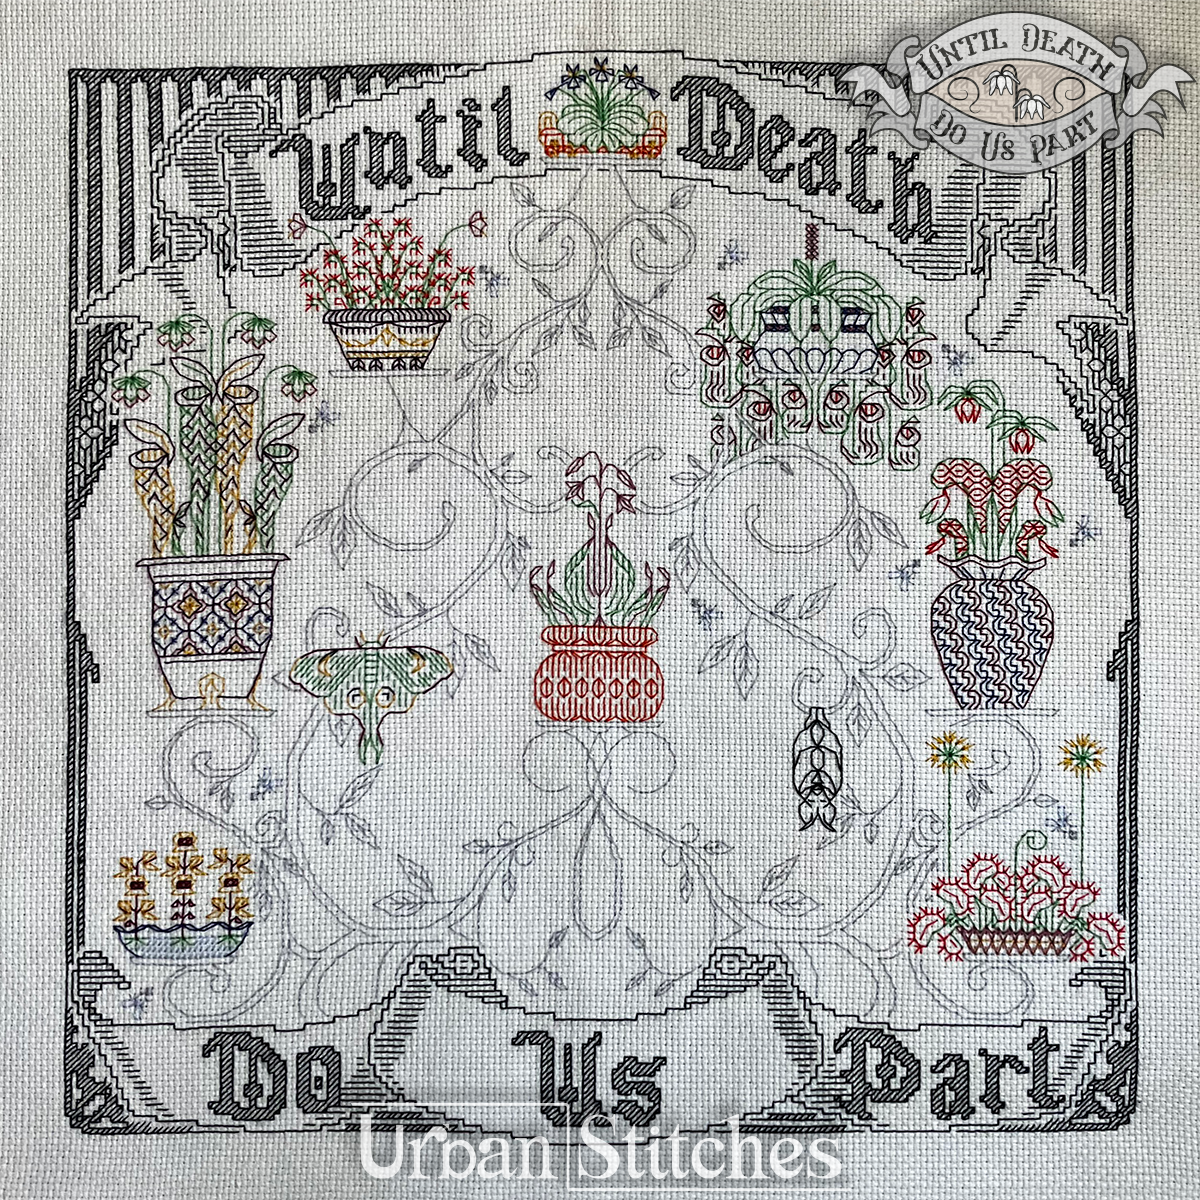 Until Death Do Us Part - Urban Stitches (stitch along) SAL - blackwork embroidery deadly plants Victorian gothic